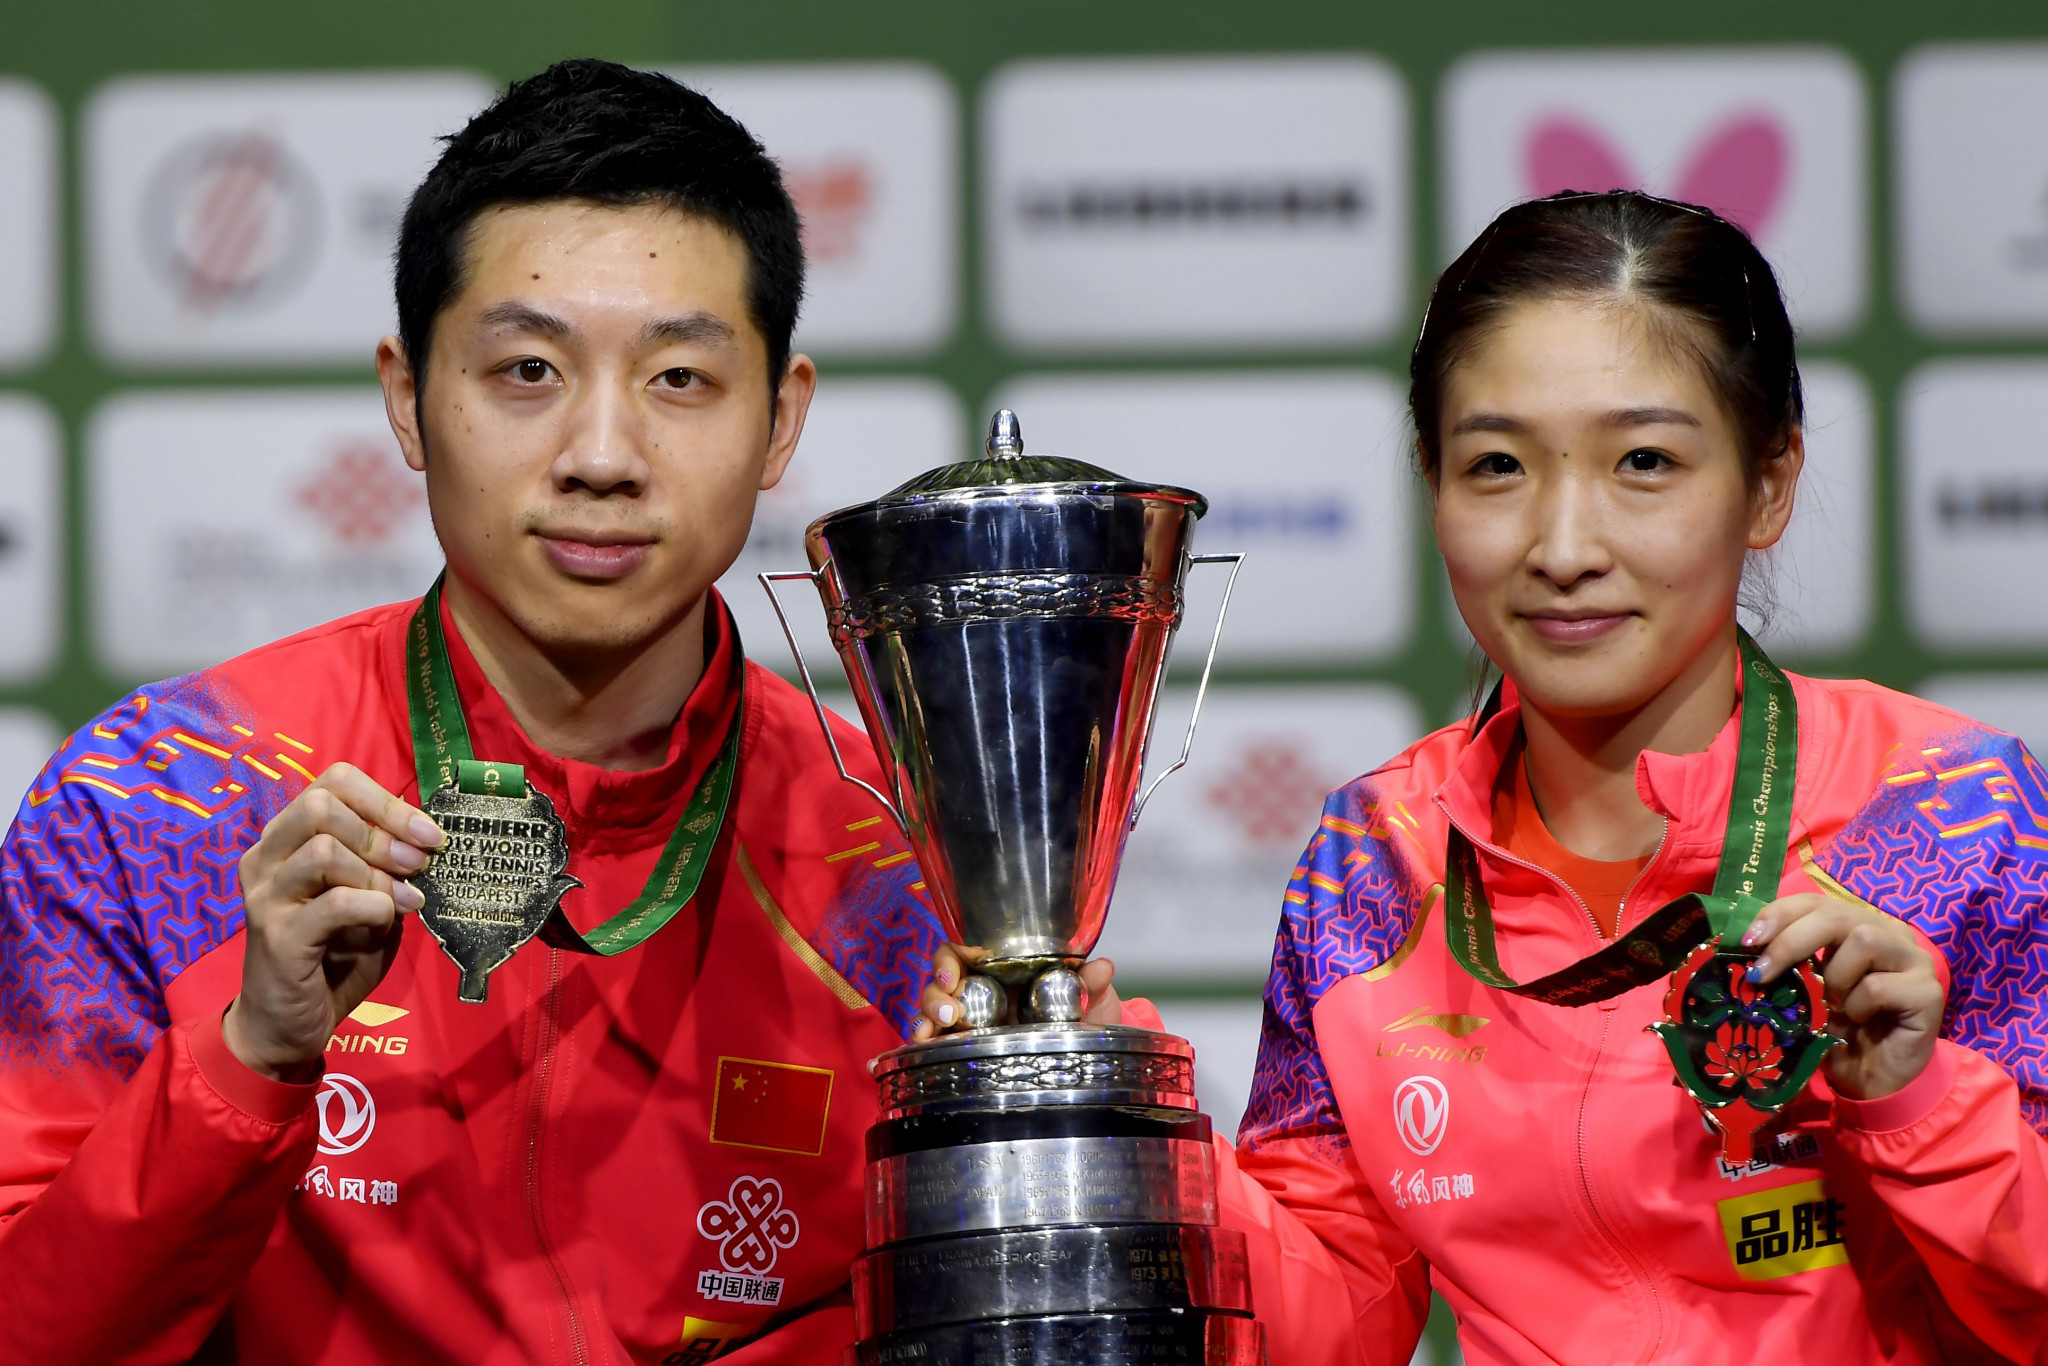 Xu and Liu crowned mixed doubles champions at ITTF World Championships